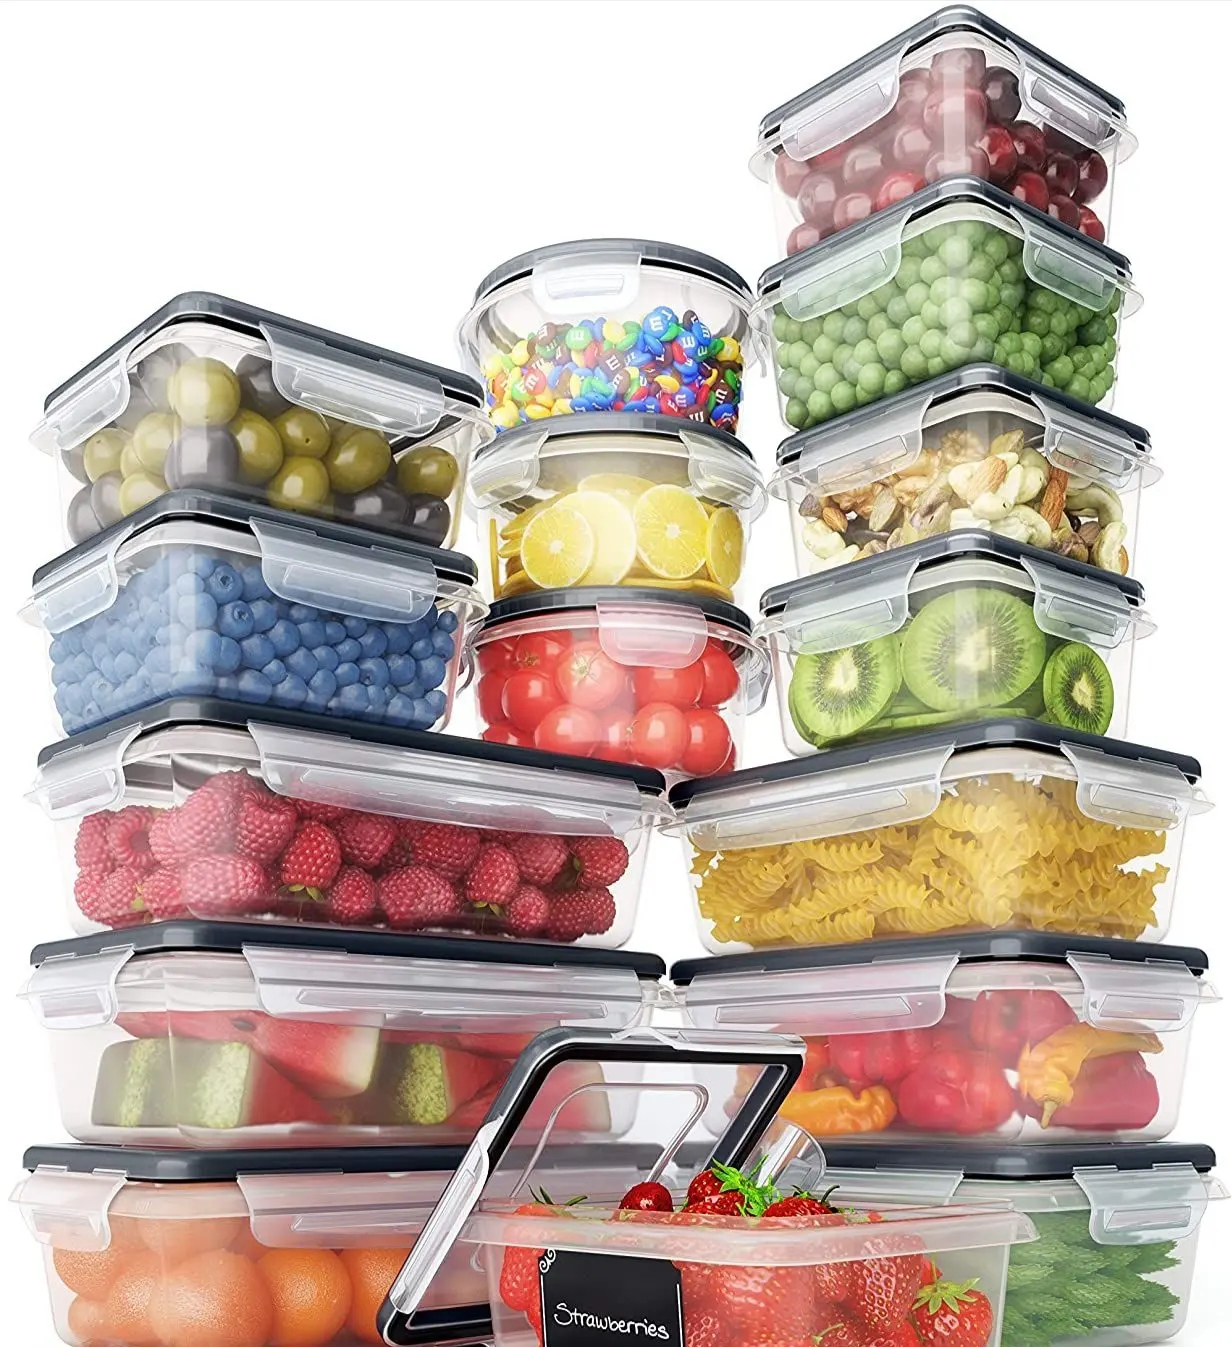 16 pc Set Kitchen Plastic Food Storage Container mit Easy Snap Lids